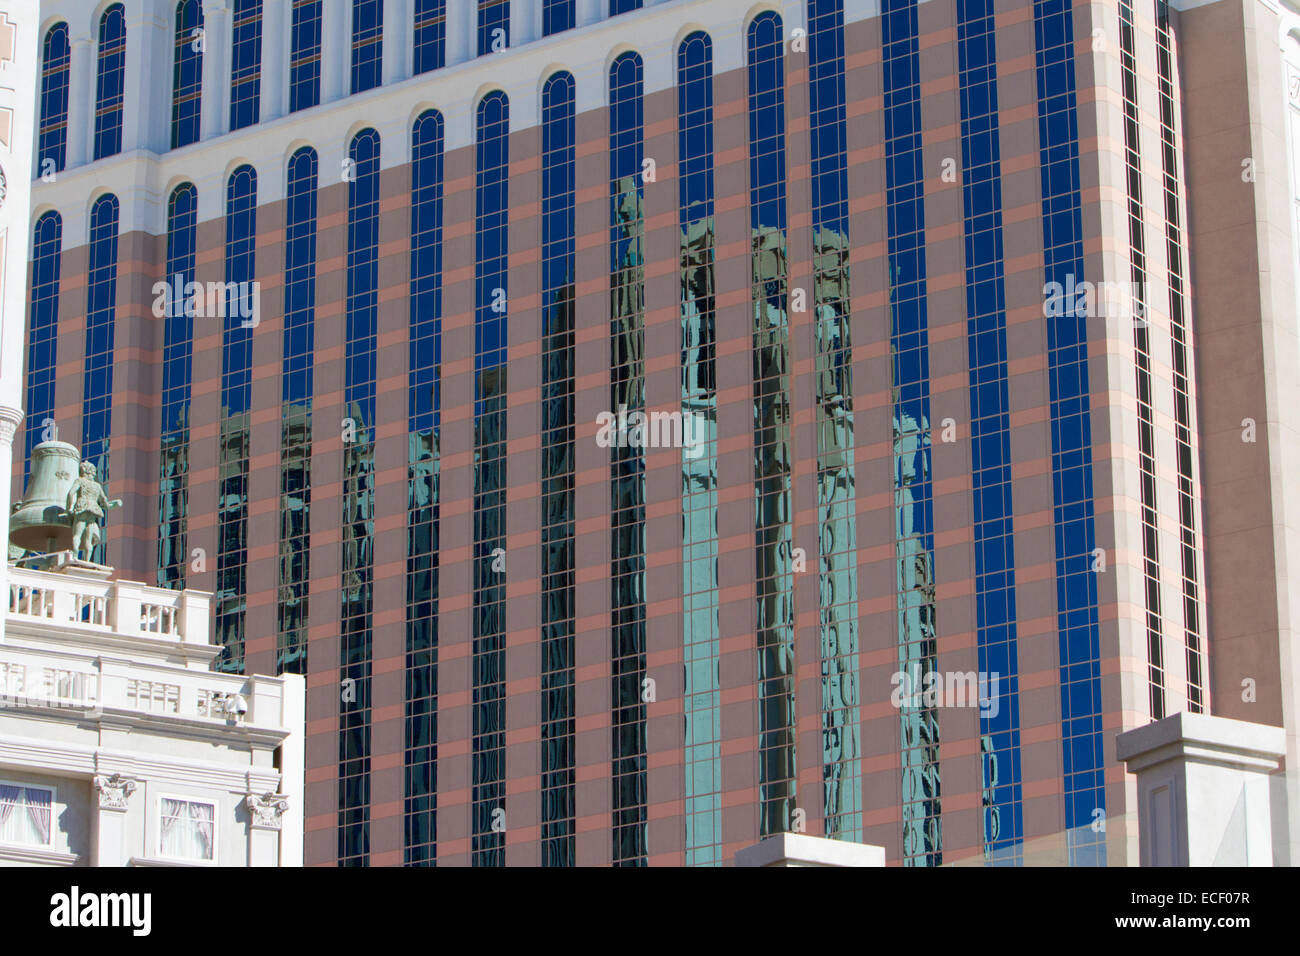 Reflets dans les fenêtres de l'Venetian Resort Hotel Casino de Las Vegas, Nevada, USA en juillet Banque D'Images